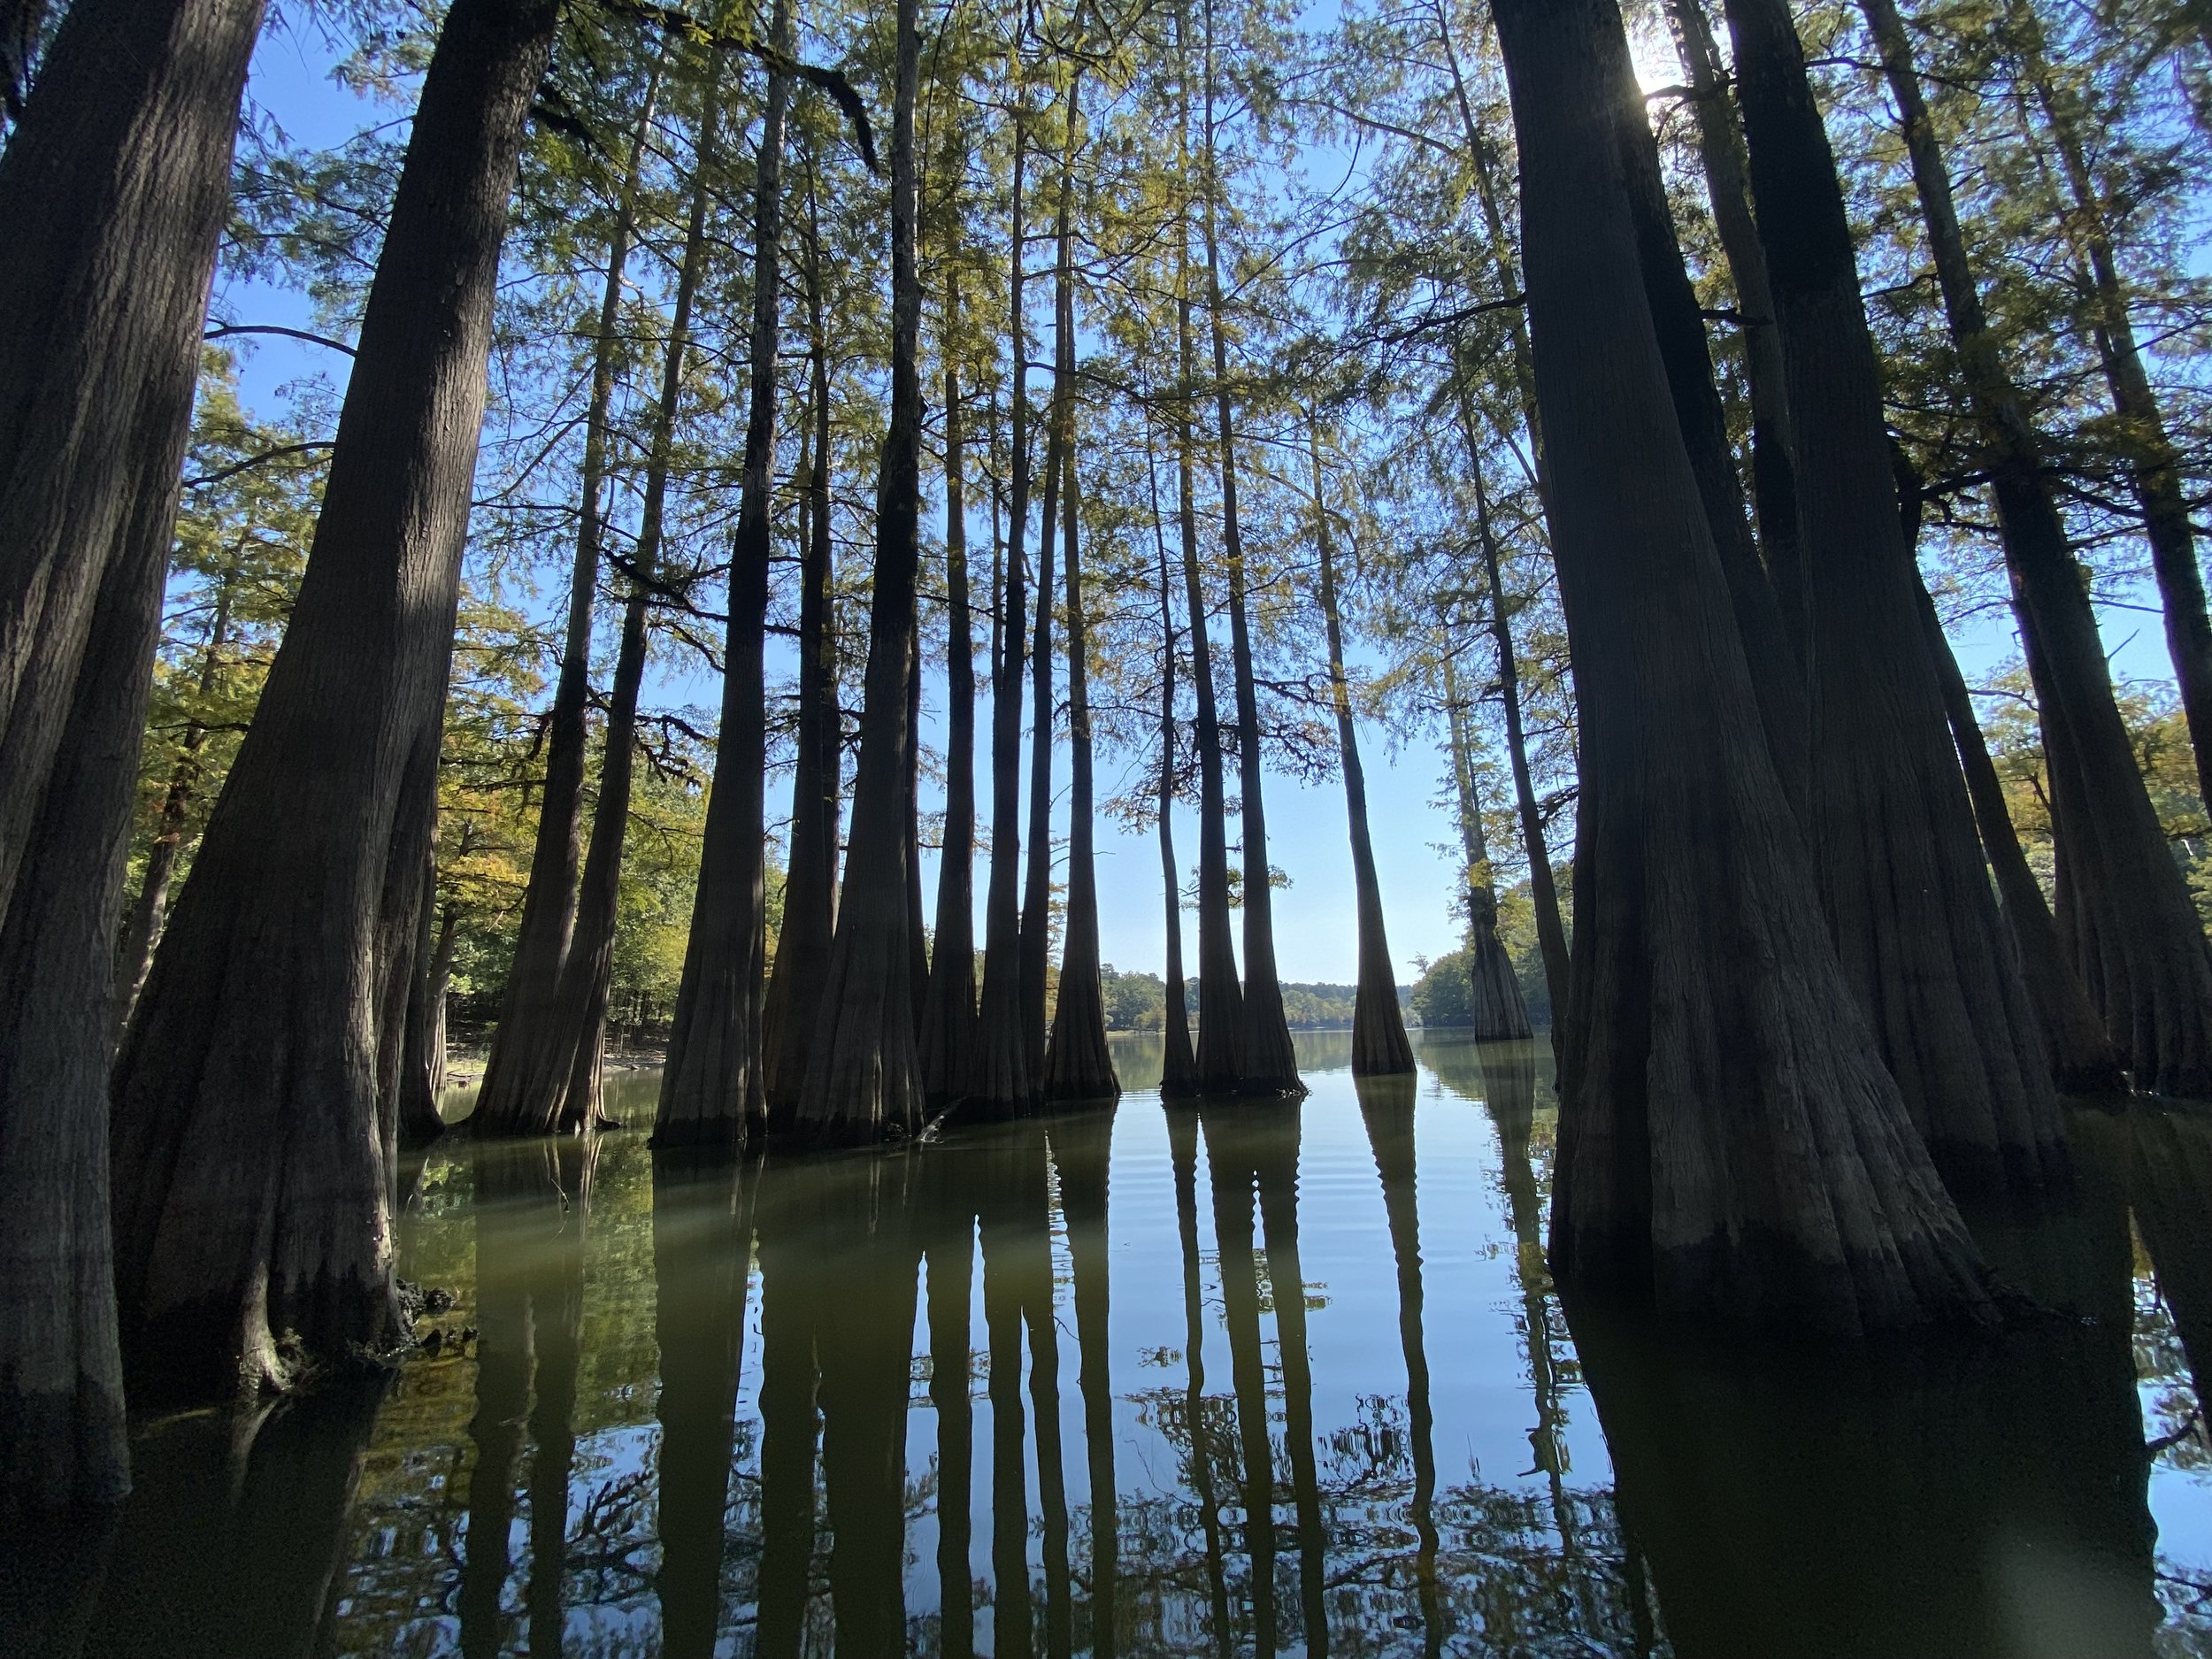  Kayaking among the bald cypress trees in Moro Bay, Arkansas. 